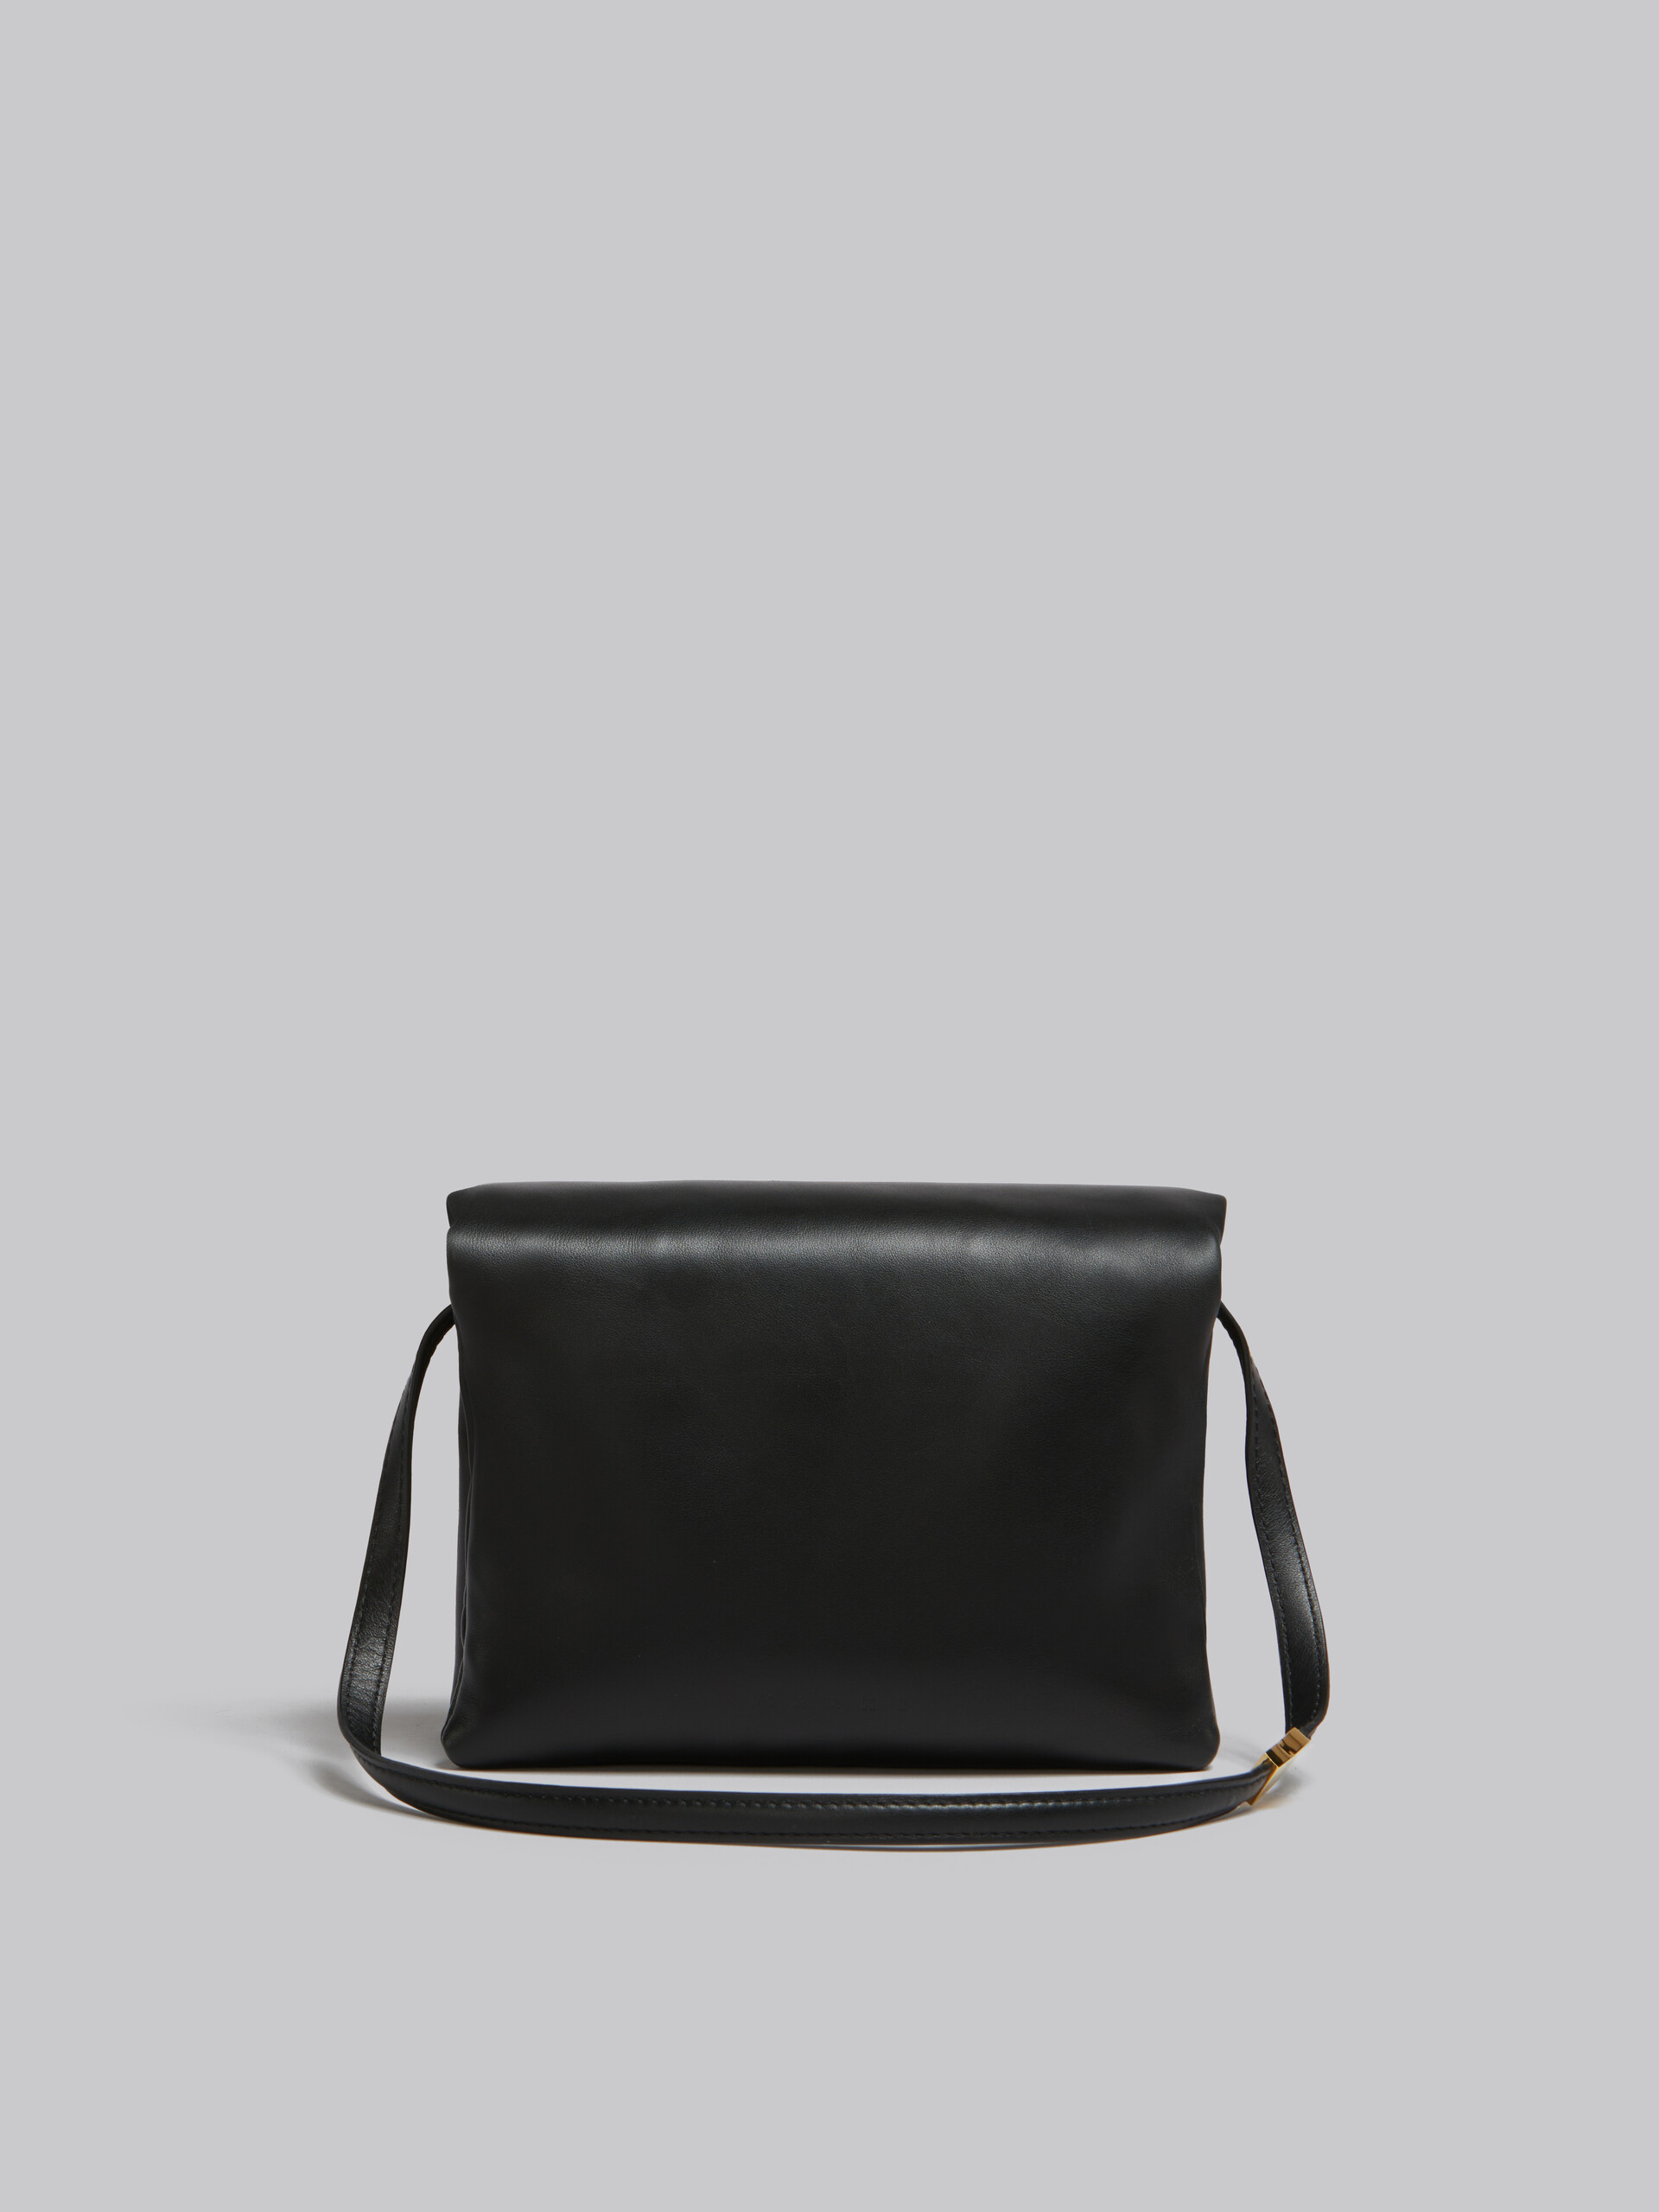 Black leather Prisma pouch - Pochette - Image 3